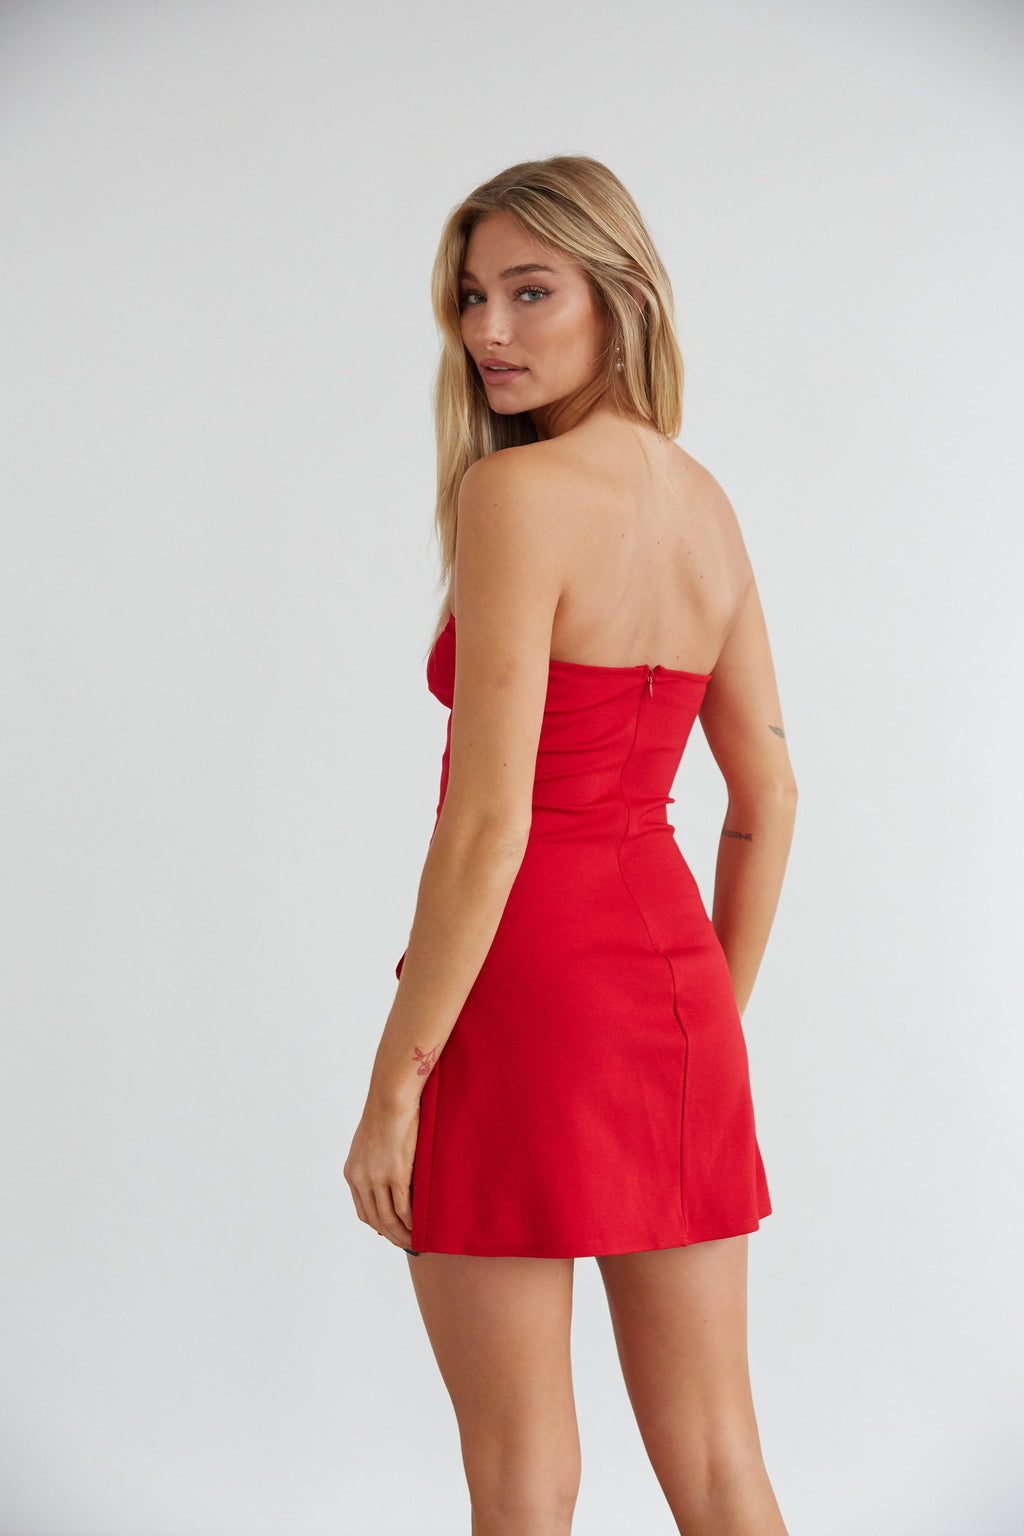 Dresses + Rompers • Shop American Threads Women's Trendy Online ...